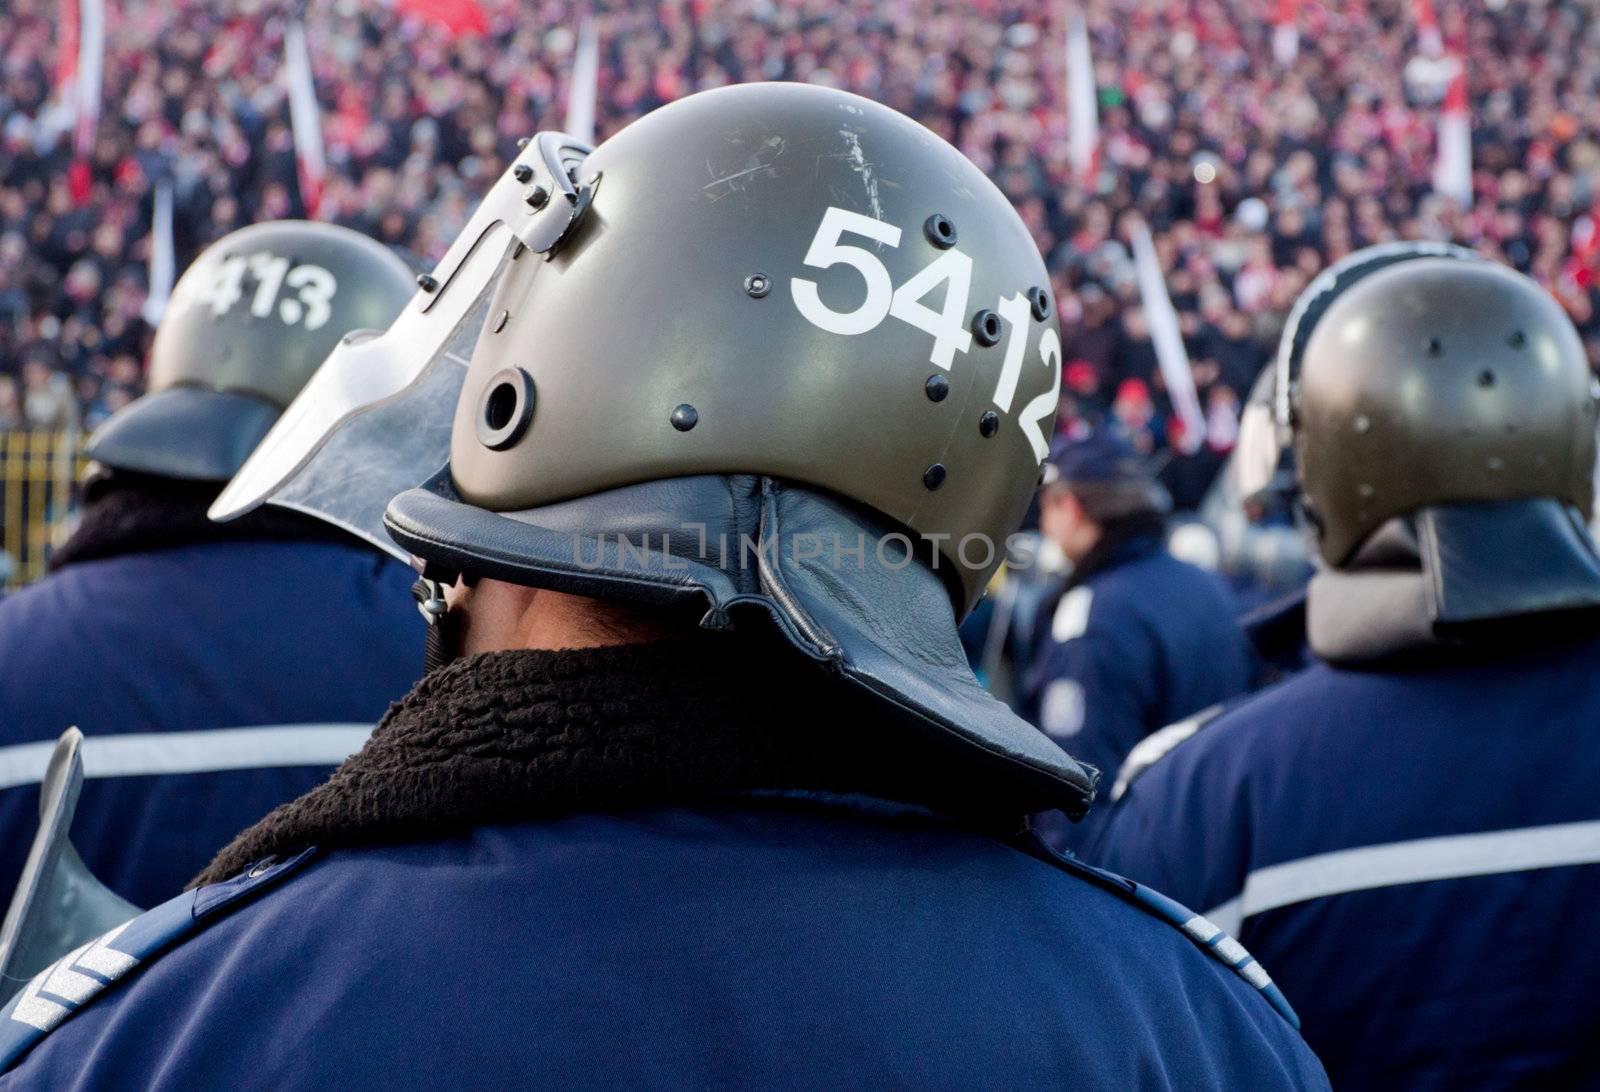 Backs of policemen guarding at stadium during a football game